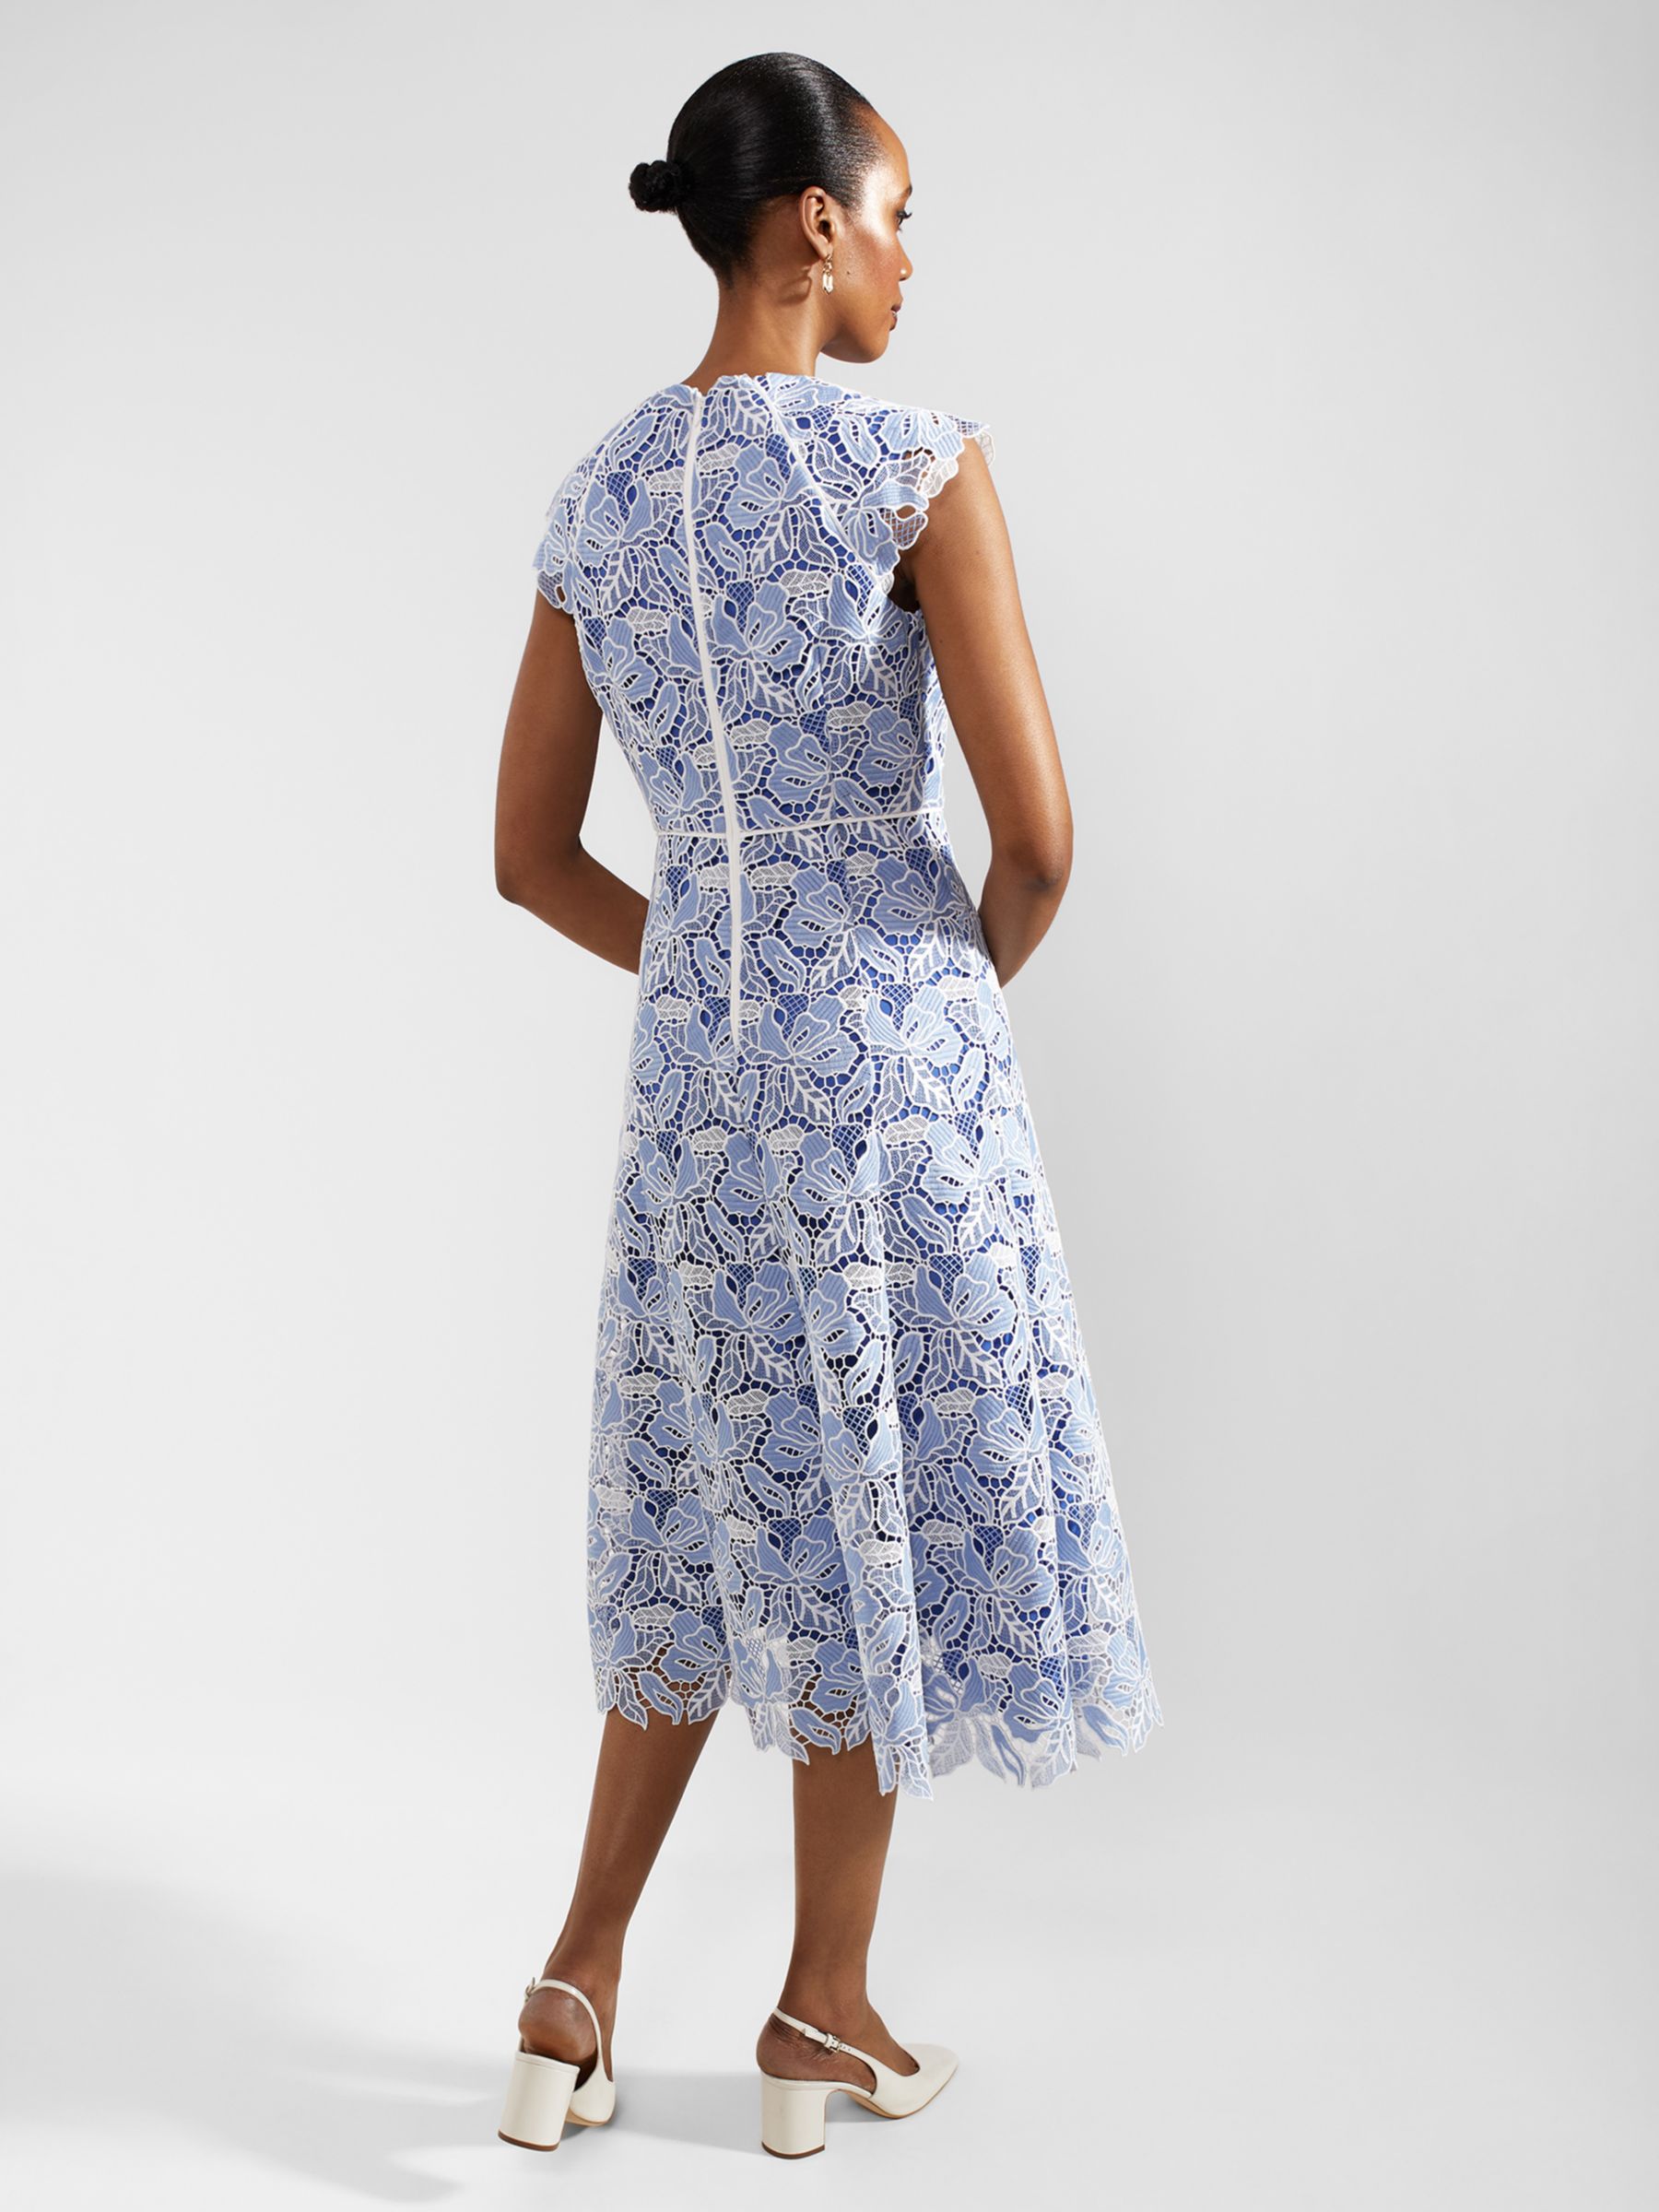 Hobbs Phoebe Cutwork Floral Lace Midi Dress, Blue/Ivory, 10